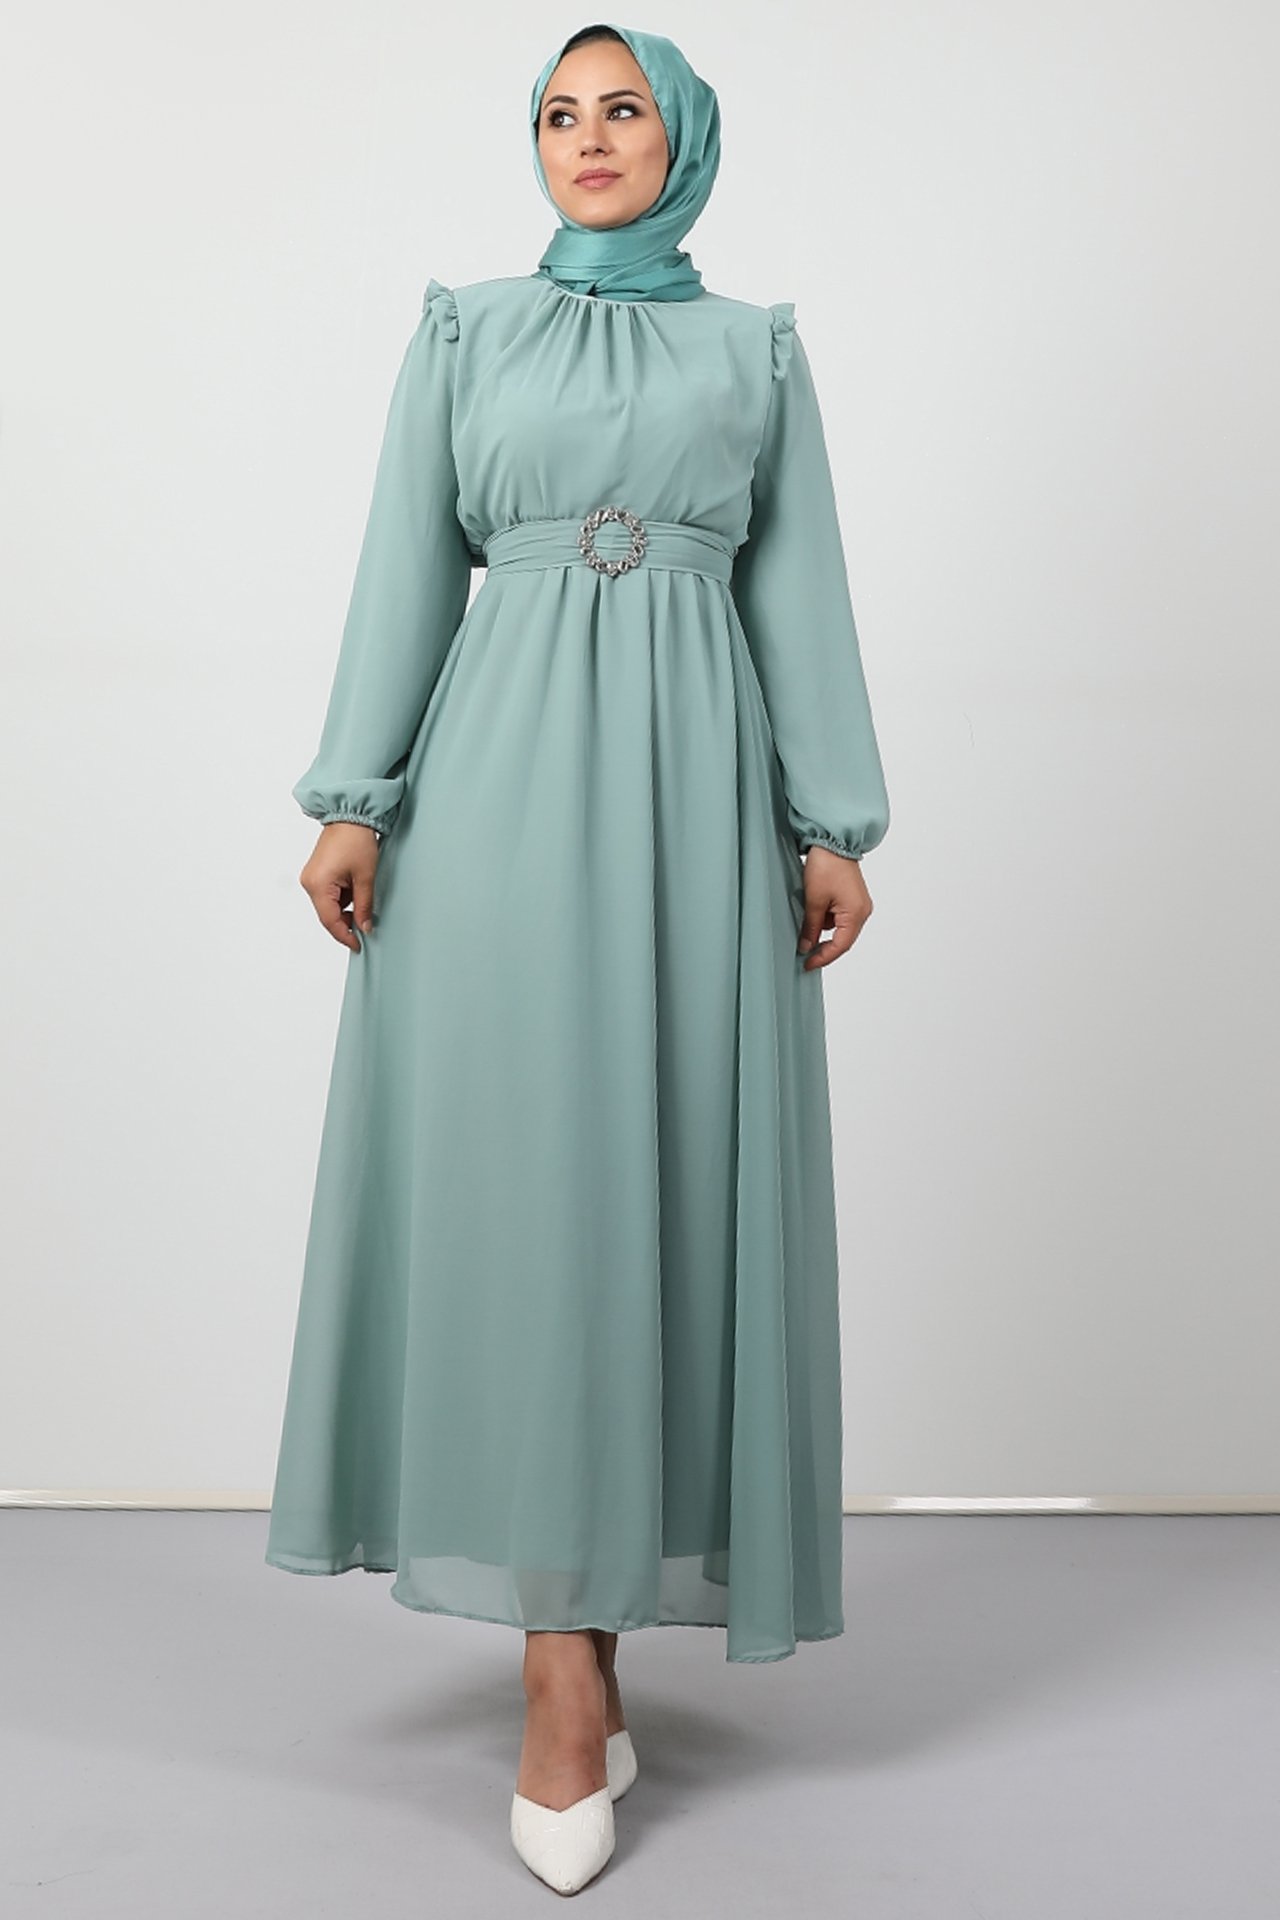 GİZAGİYİM - Tokalı Şifon Elbise Mint